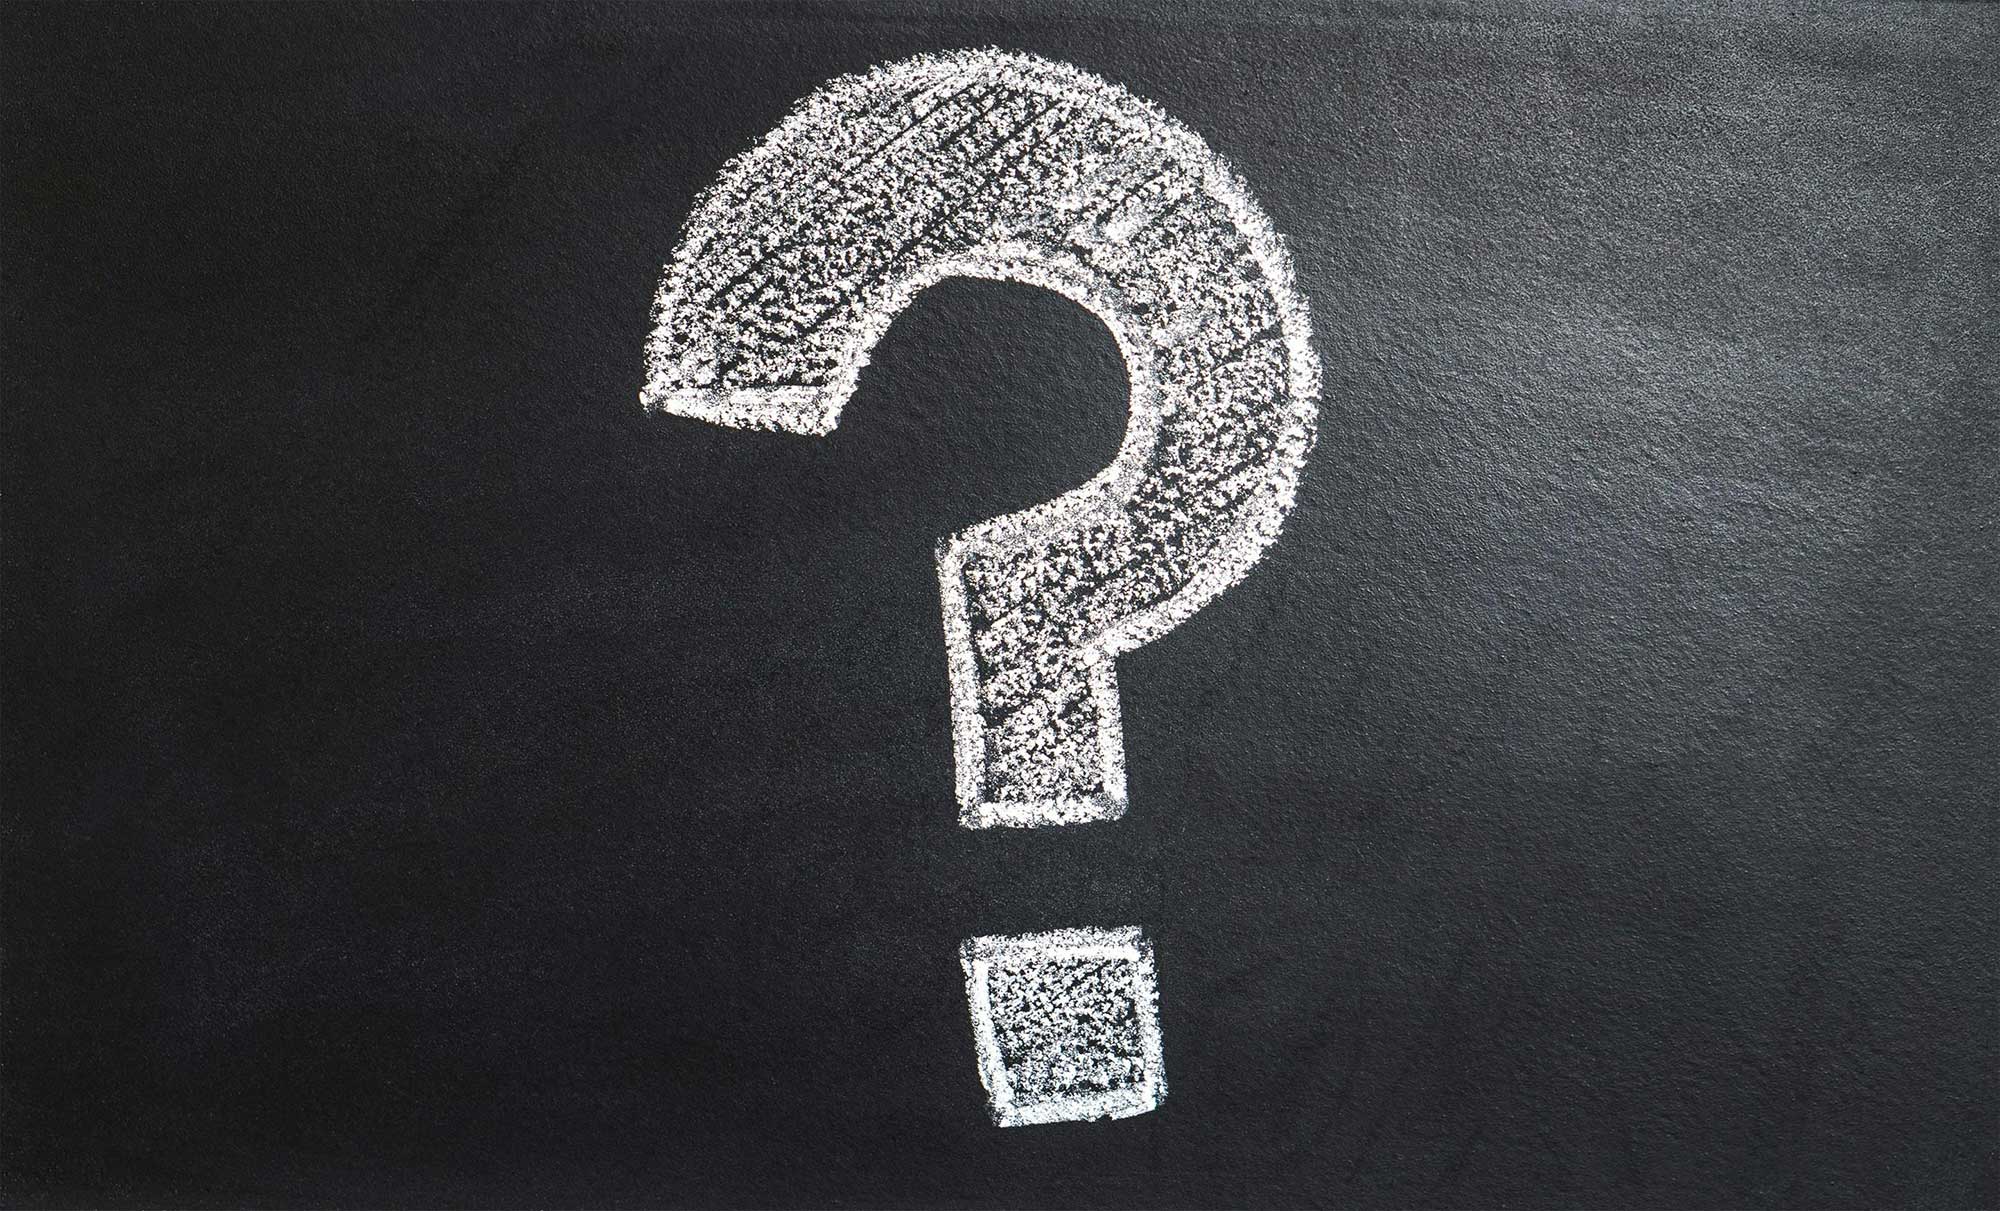 A large question mark drawn on a chalk board.